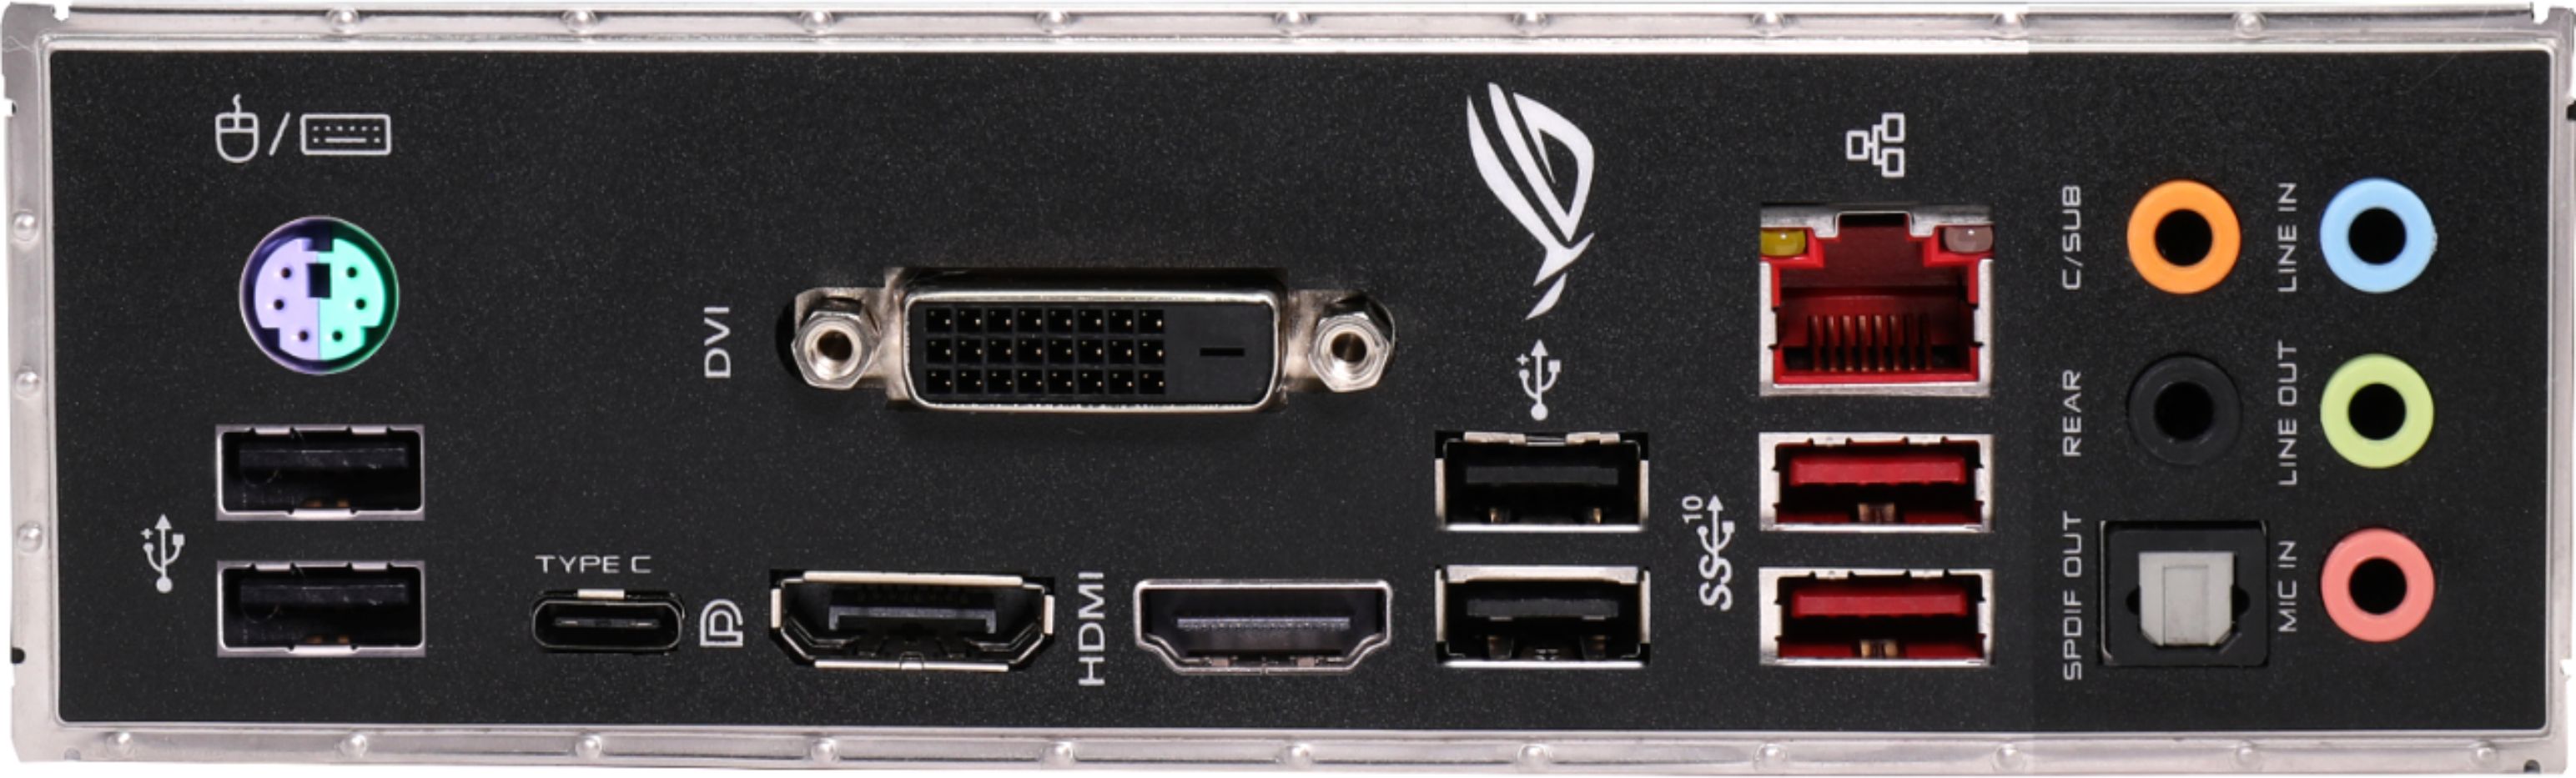 Asus Rog Strix H370 F Gaming Socket Lga1151 Usb 3 1 Gen 1 Intel Motherboard With Led Lighting Strix H370 F Gaming Best Buy